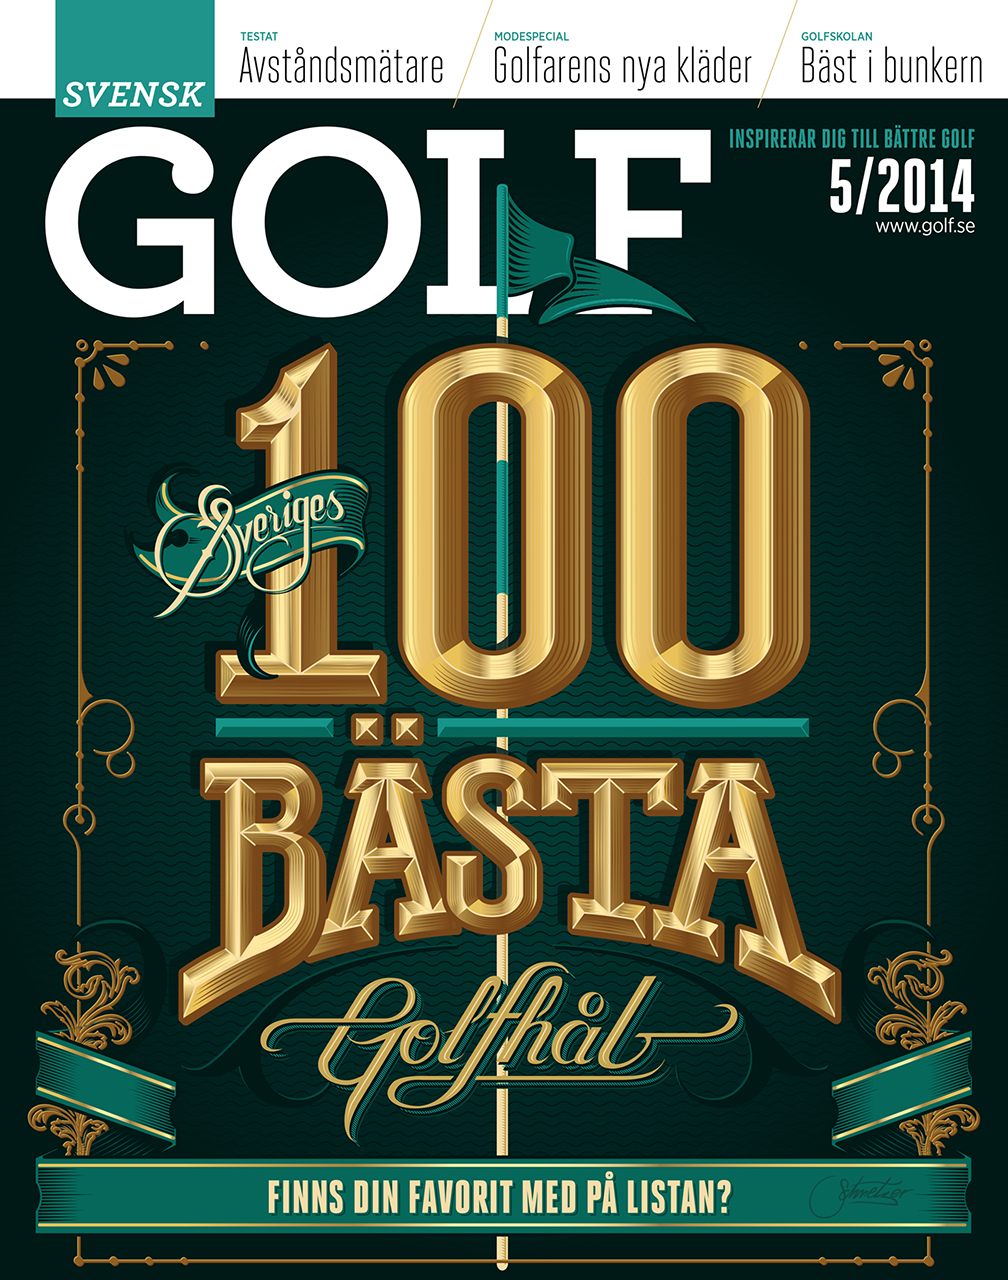 magazine cover design for Svensk Golf Schmetzer typografiskt omslag hand ritade bokstäver